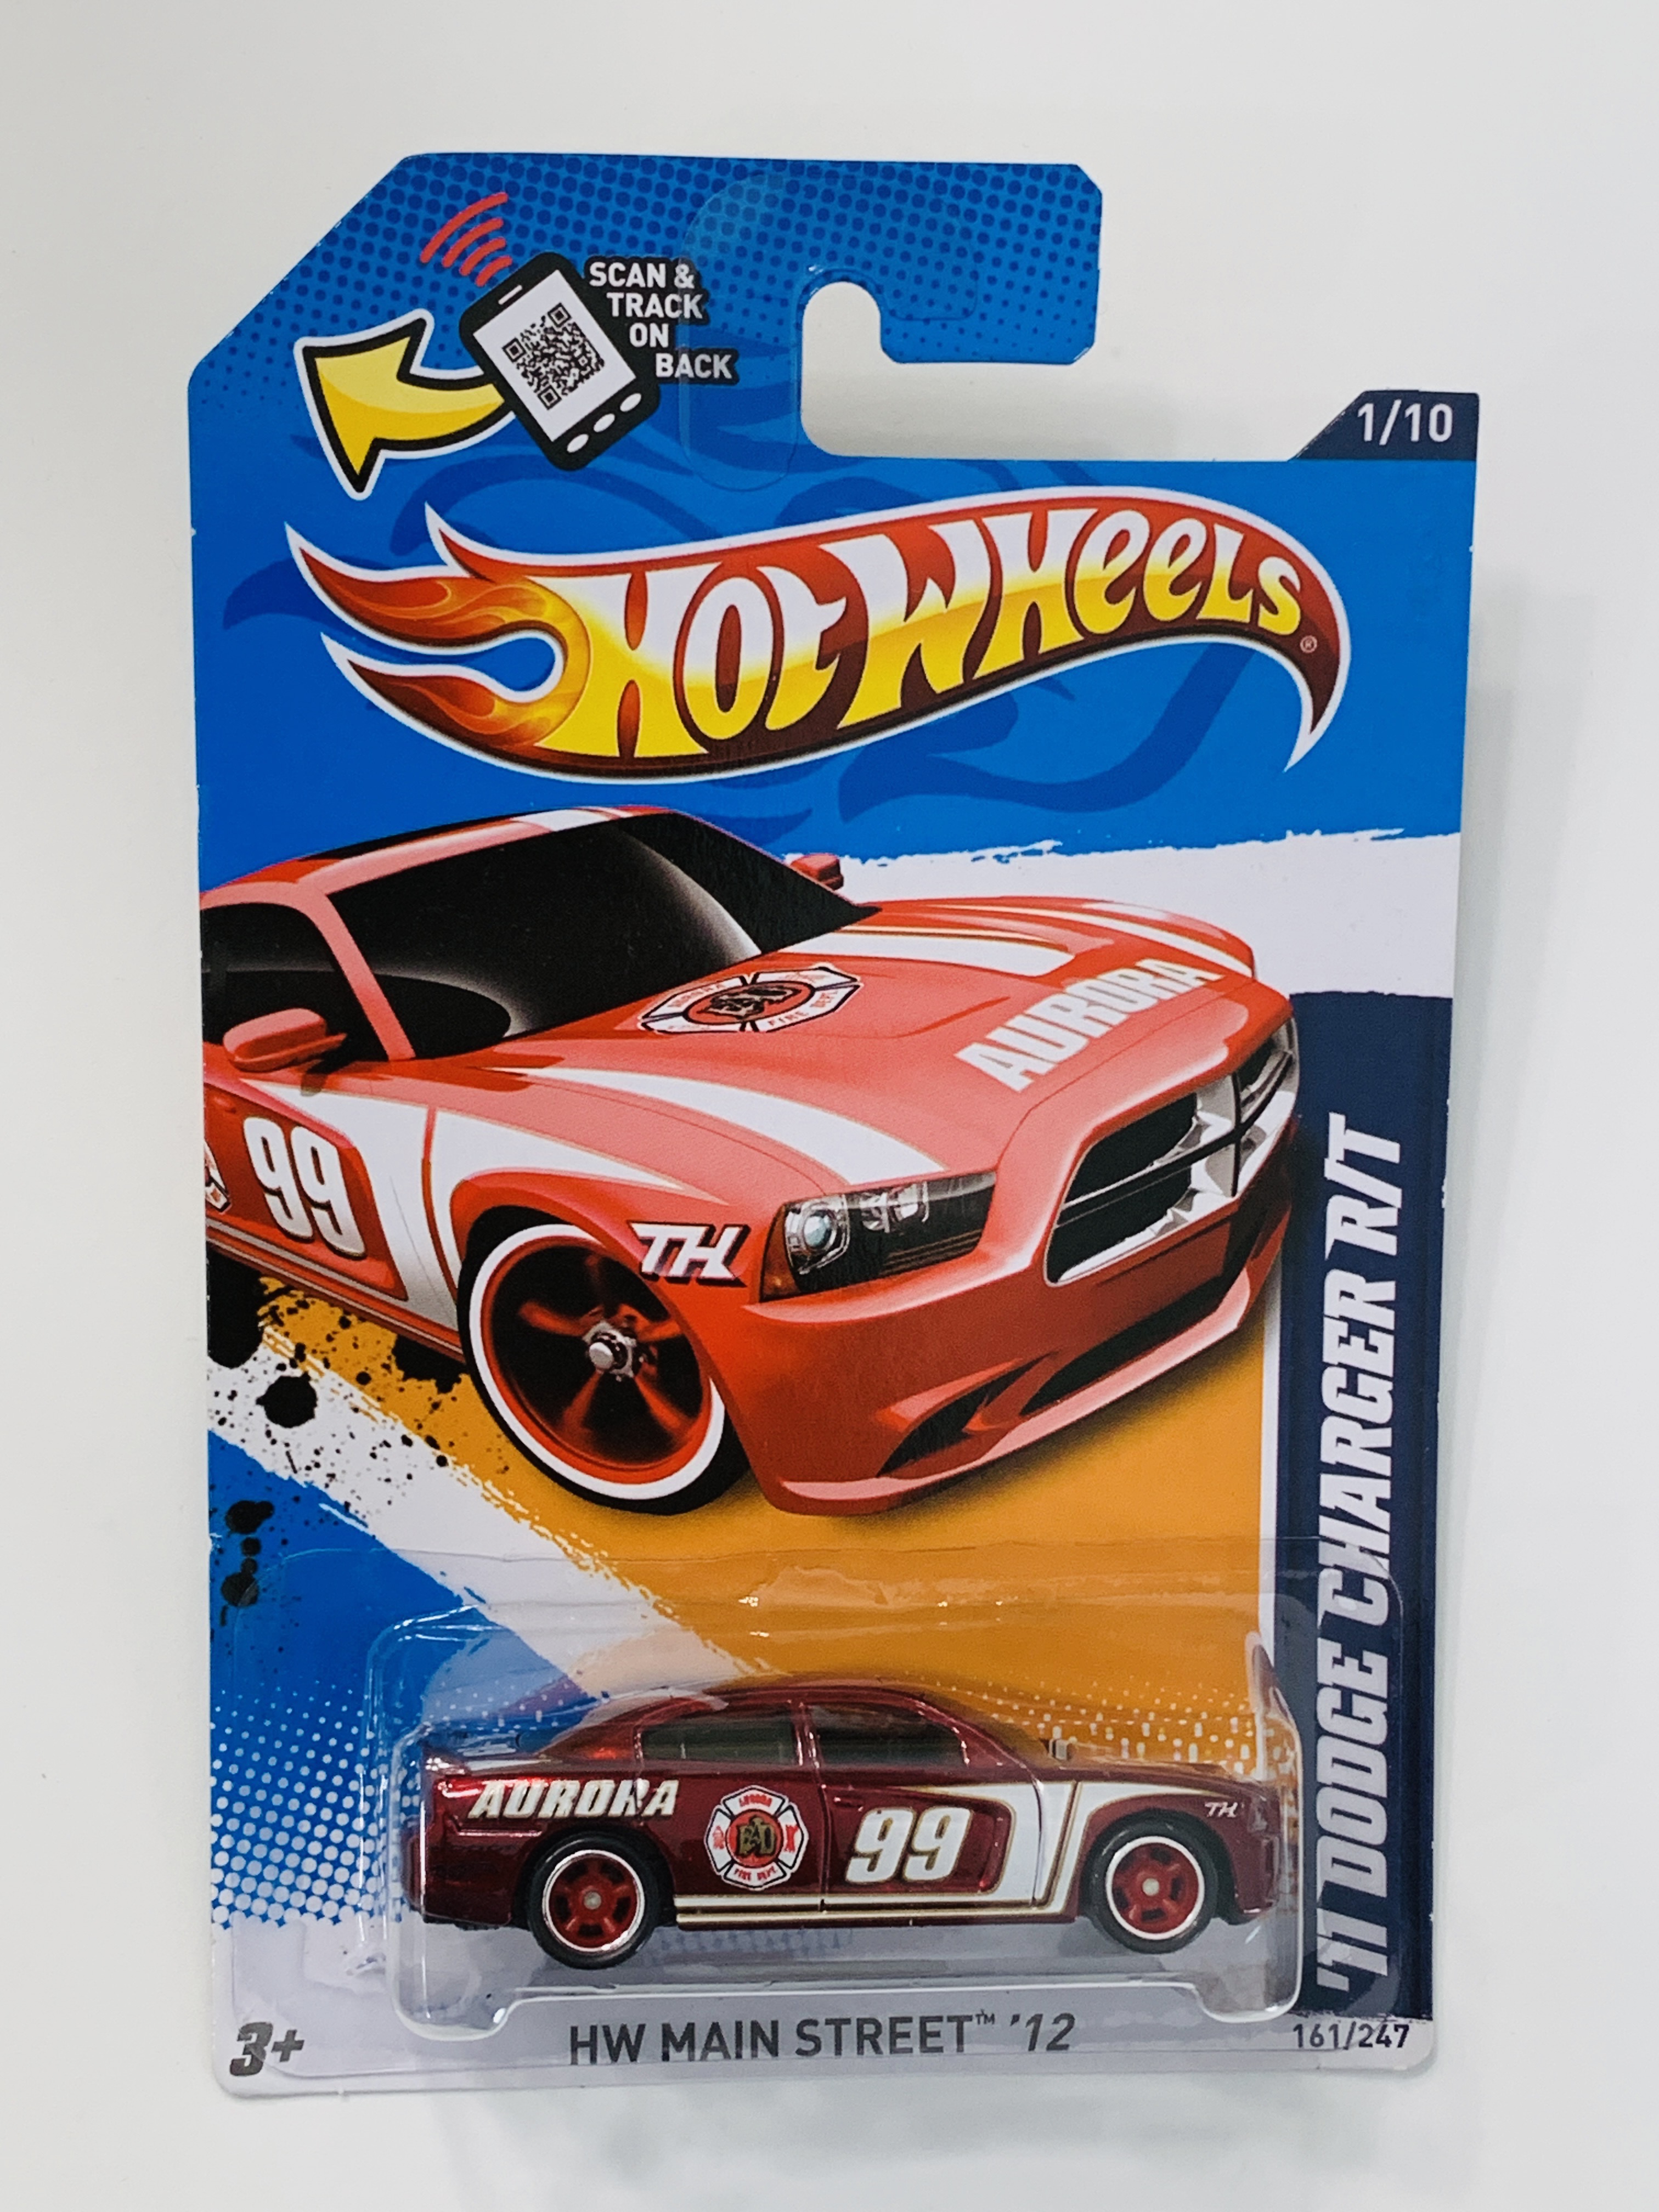 Hot Wheels #161 '11 Dodge Charger Super Treasure Hunt